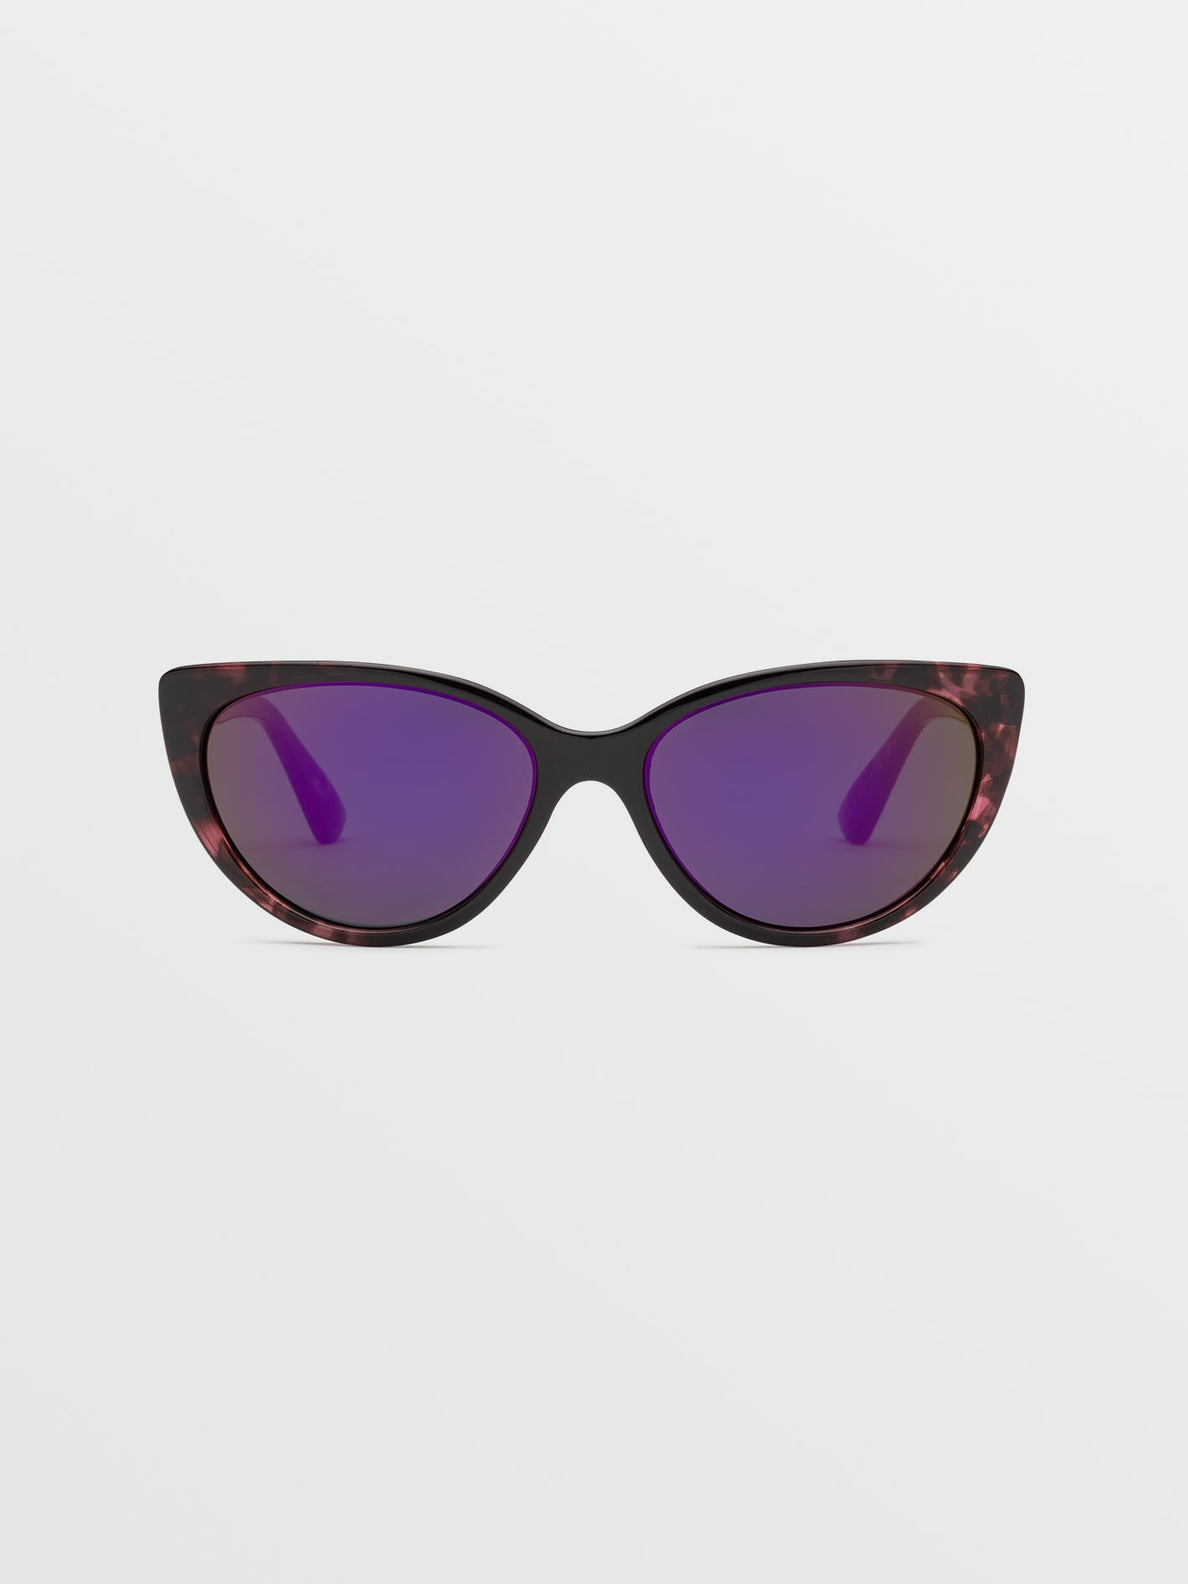 Butter Sunglasses - Gloss Purple Tort/Gray Purple Chrome (VE02703421_0000) [1]